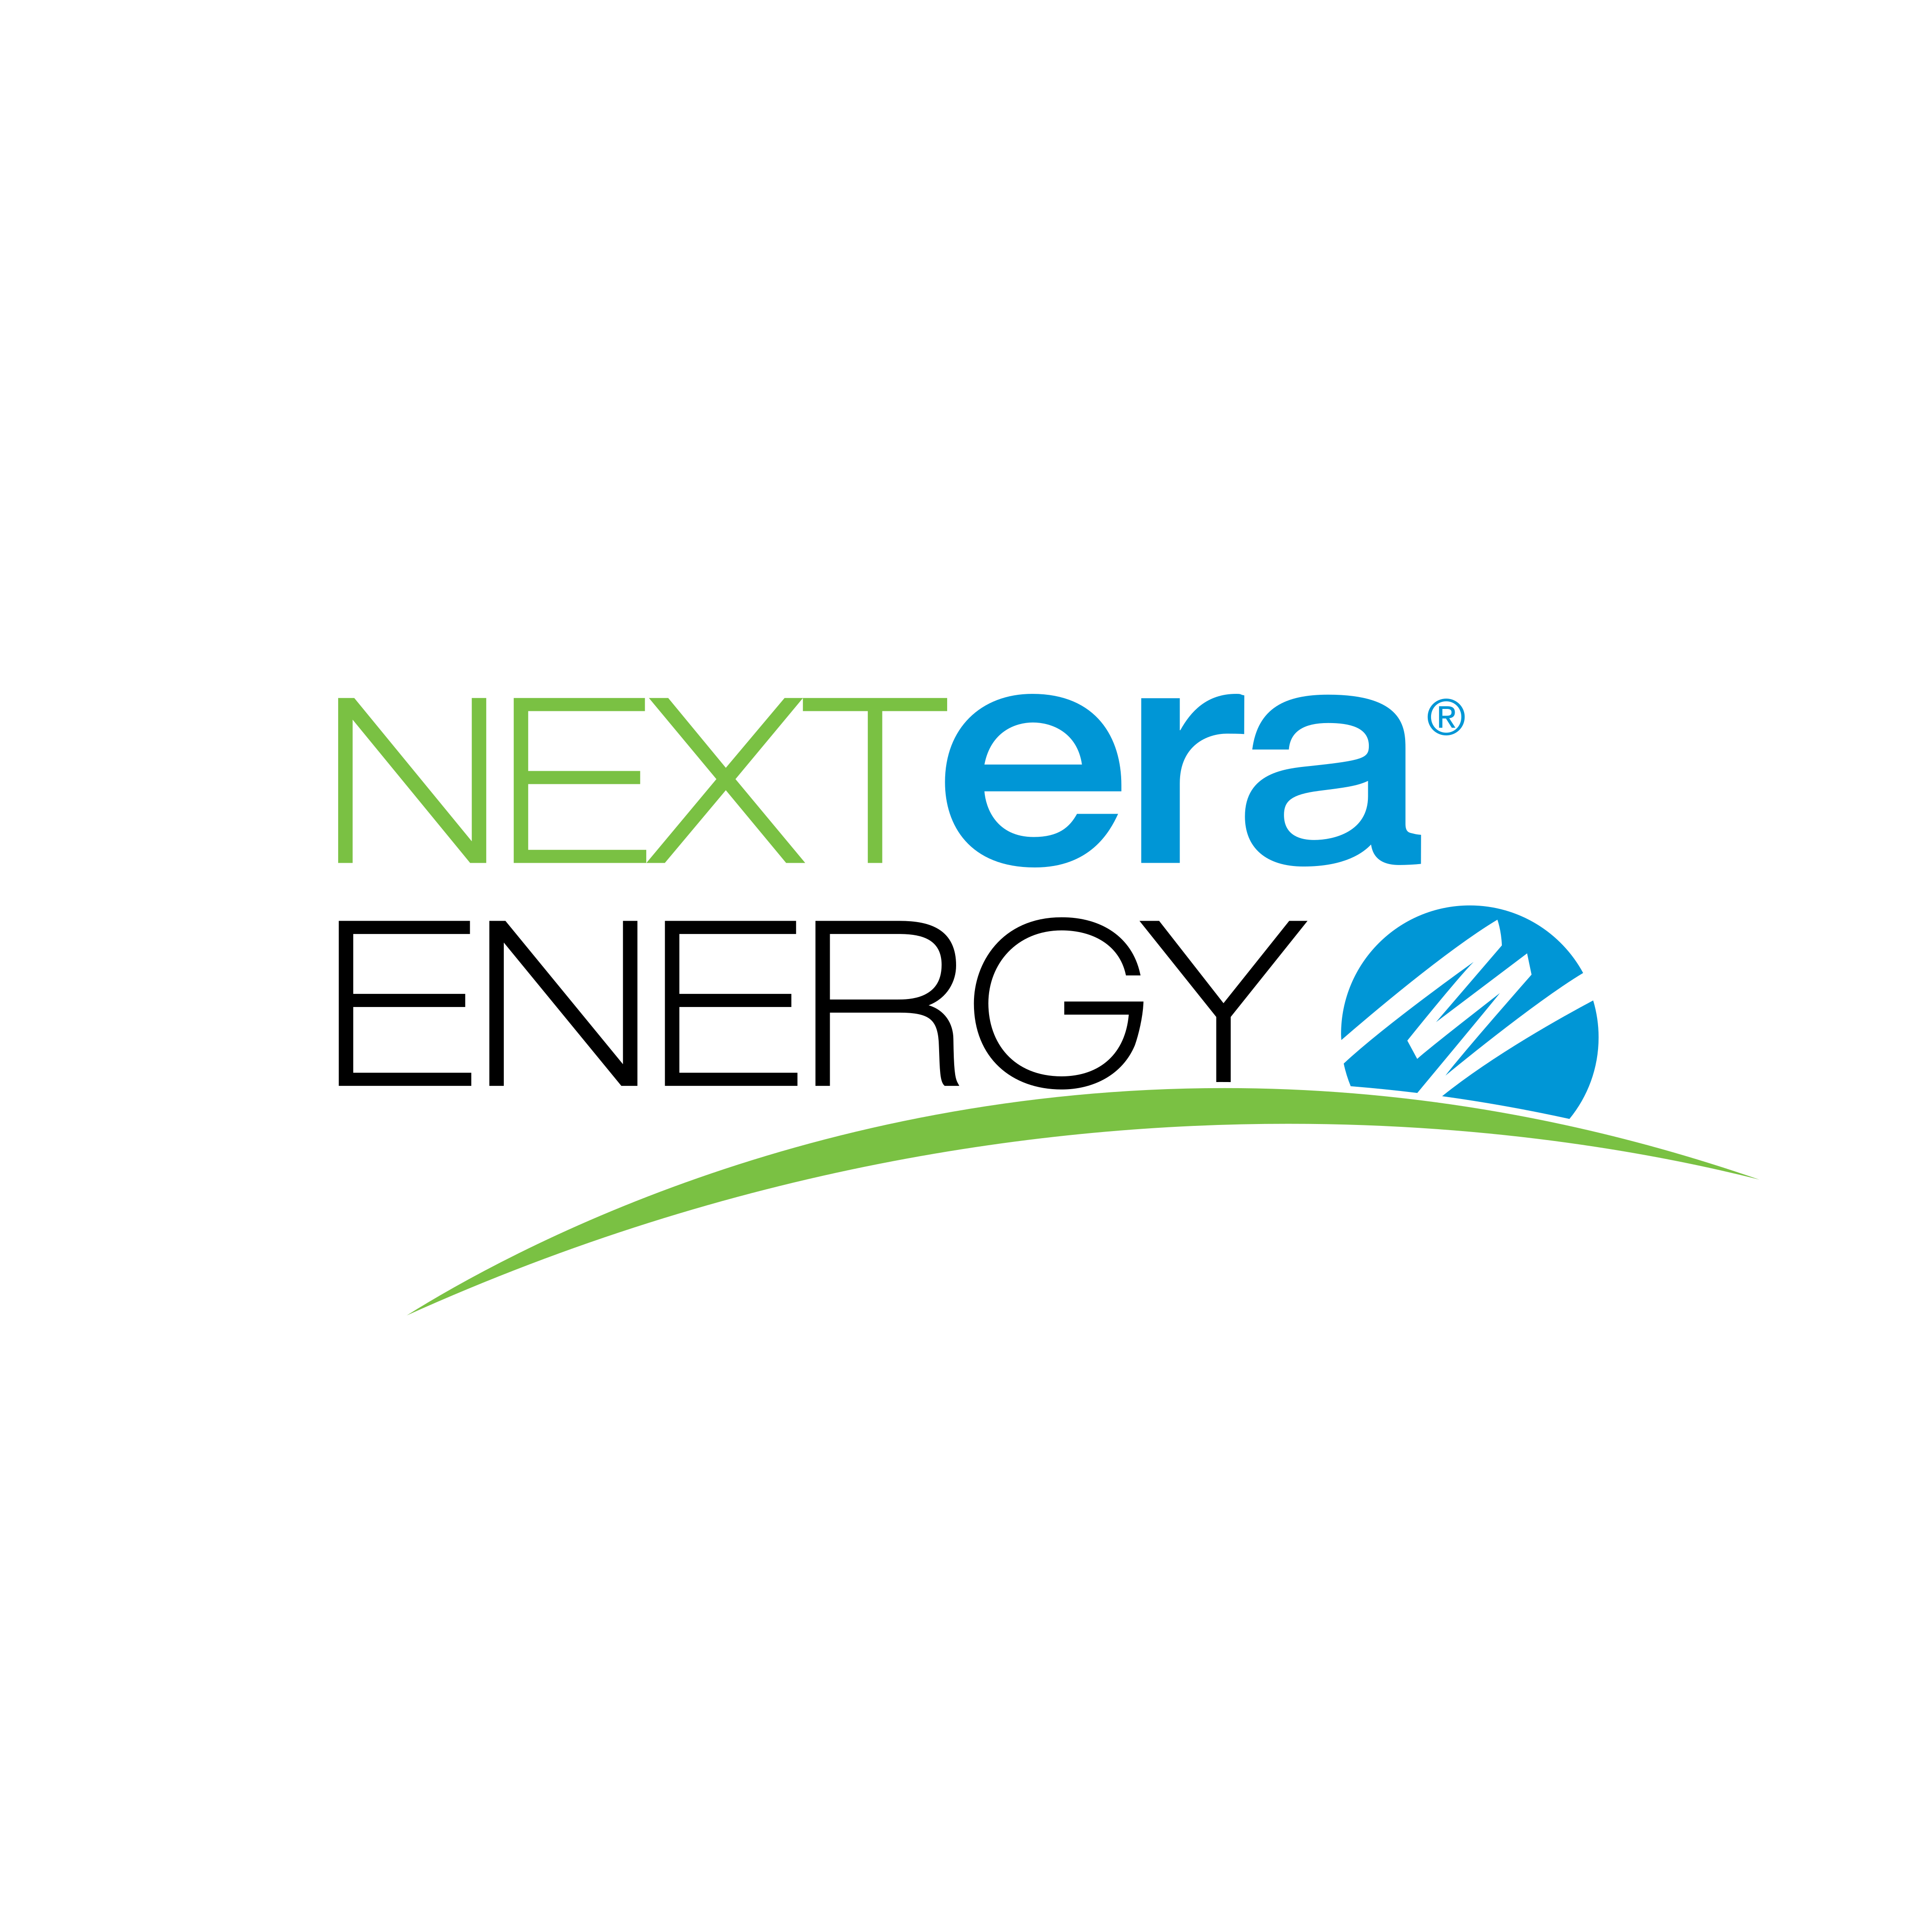 NextEra Energy Logo PNG.